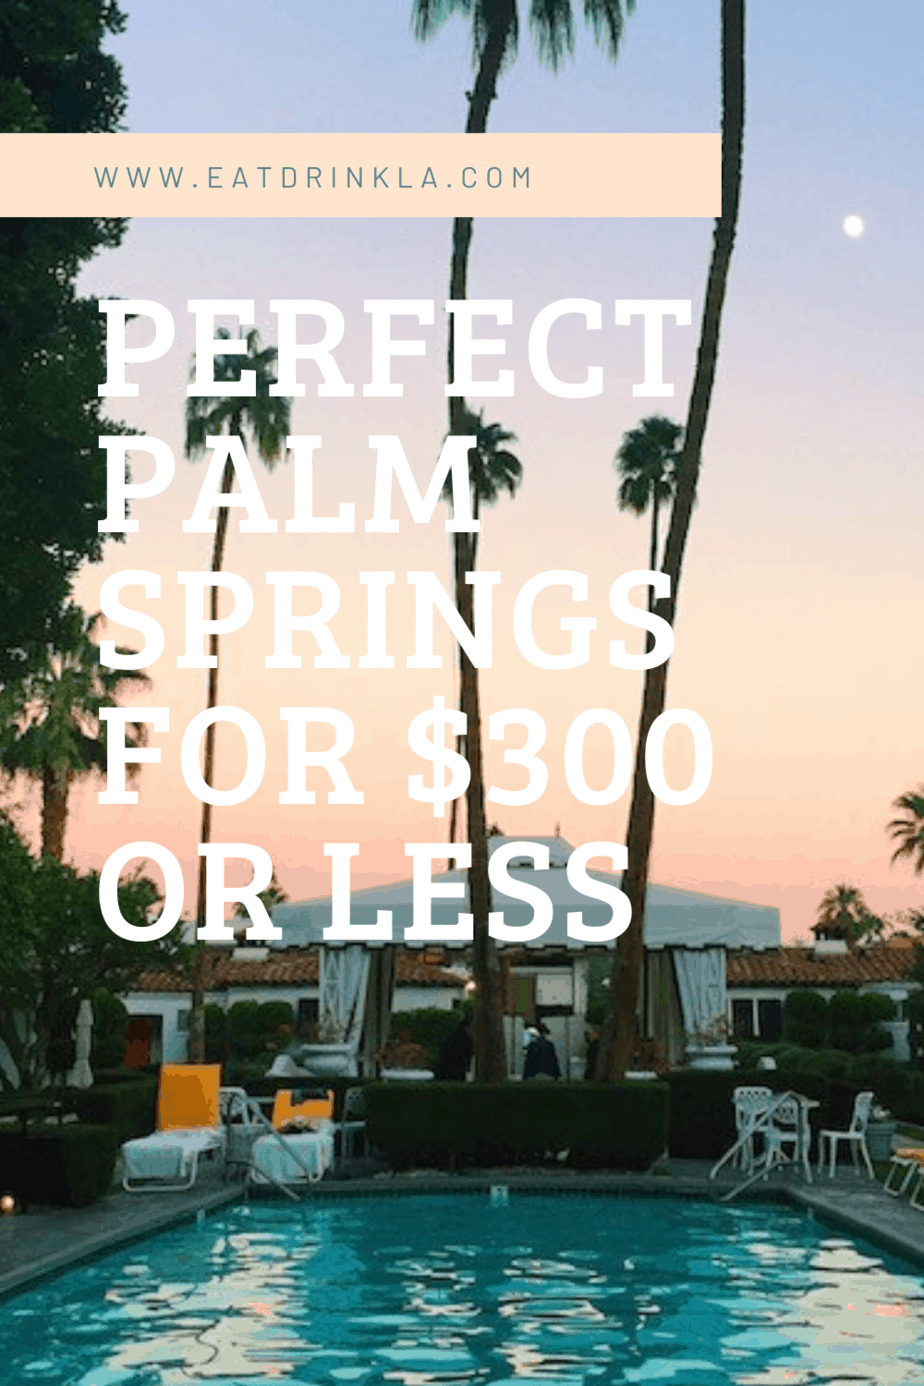 Perfect Palm Springs Getaway Pinterest